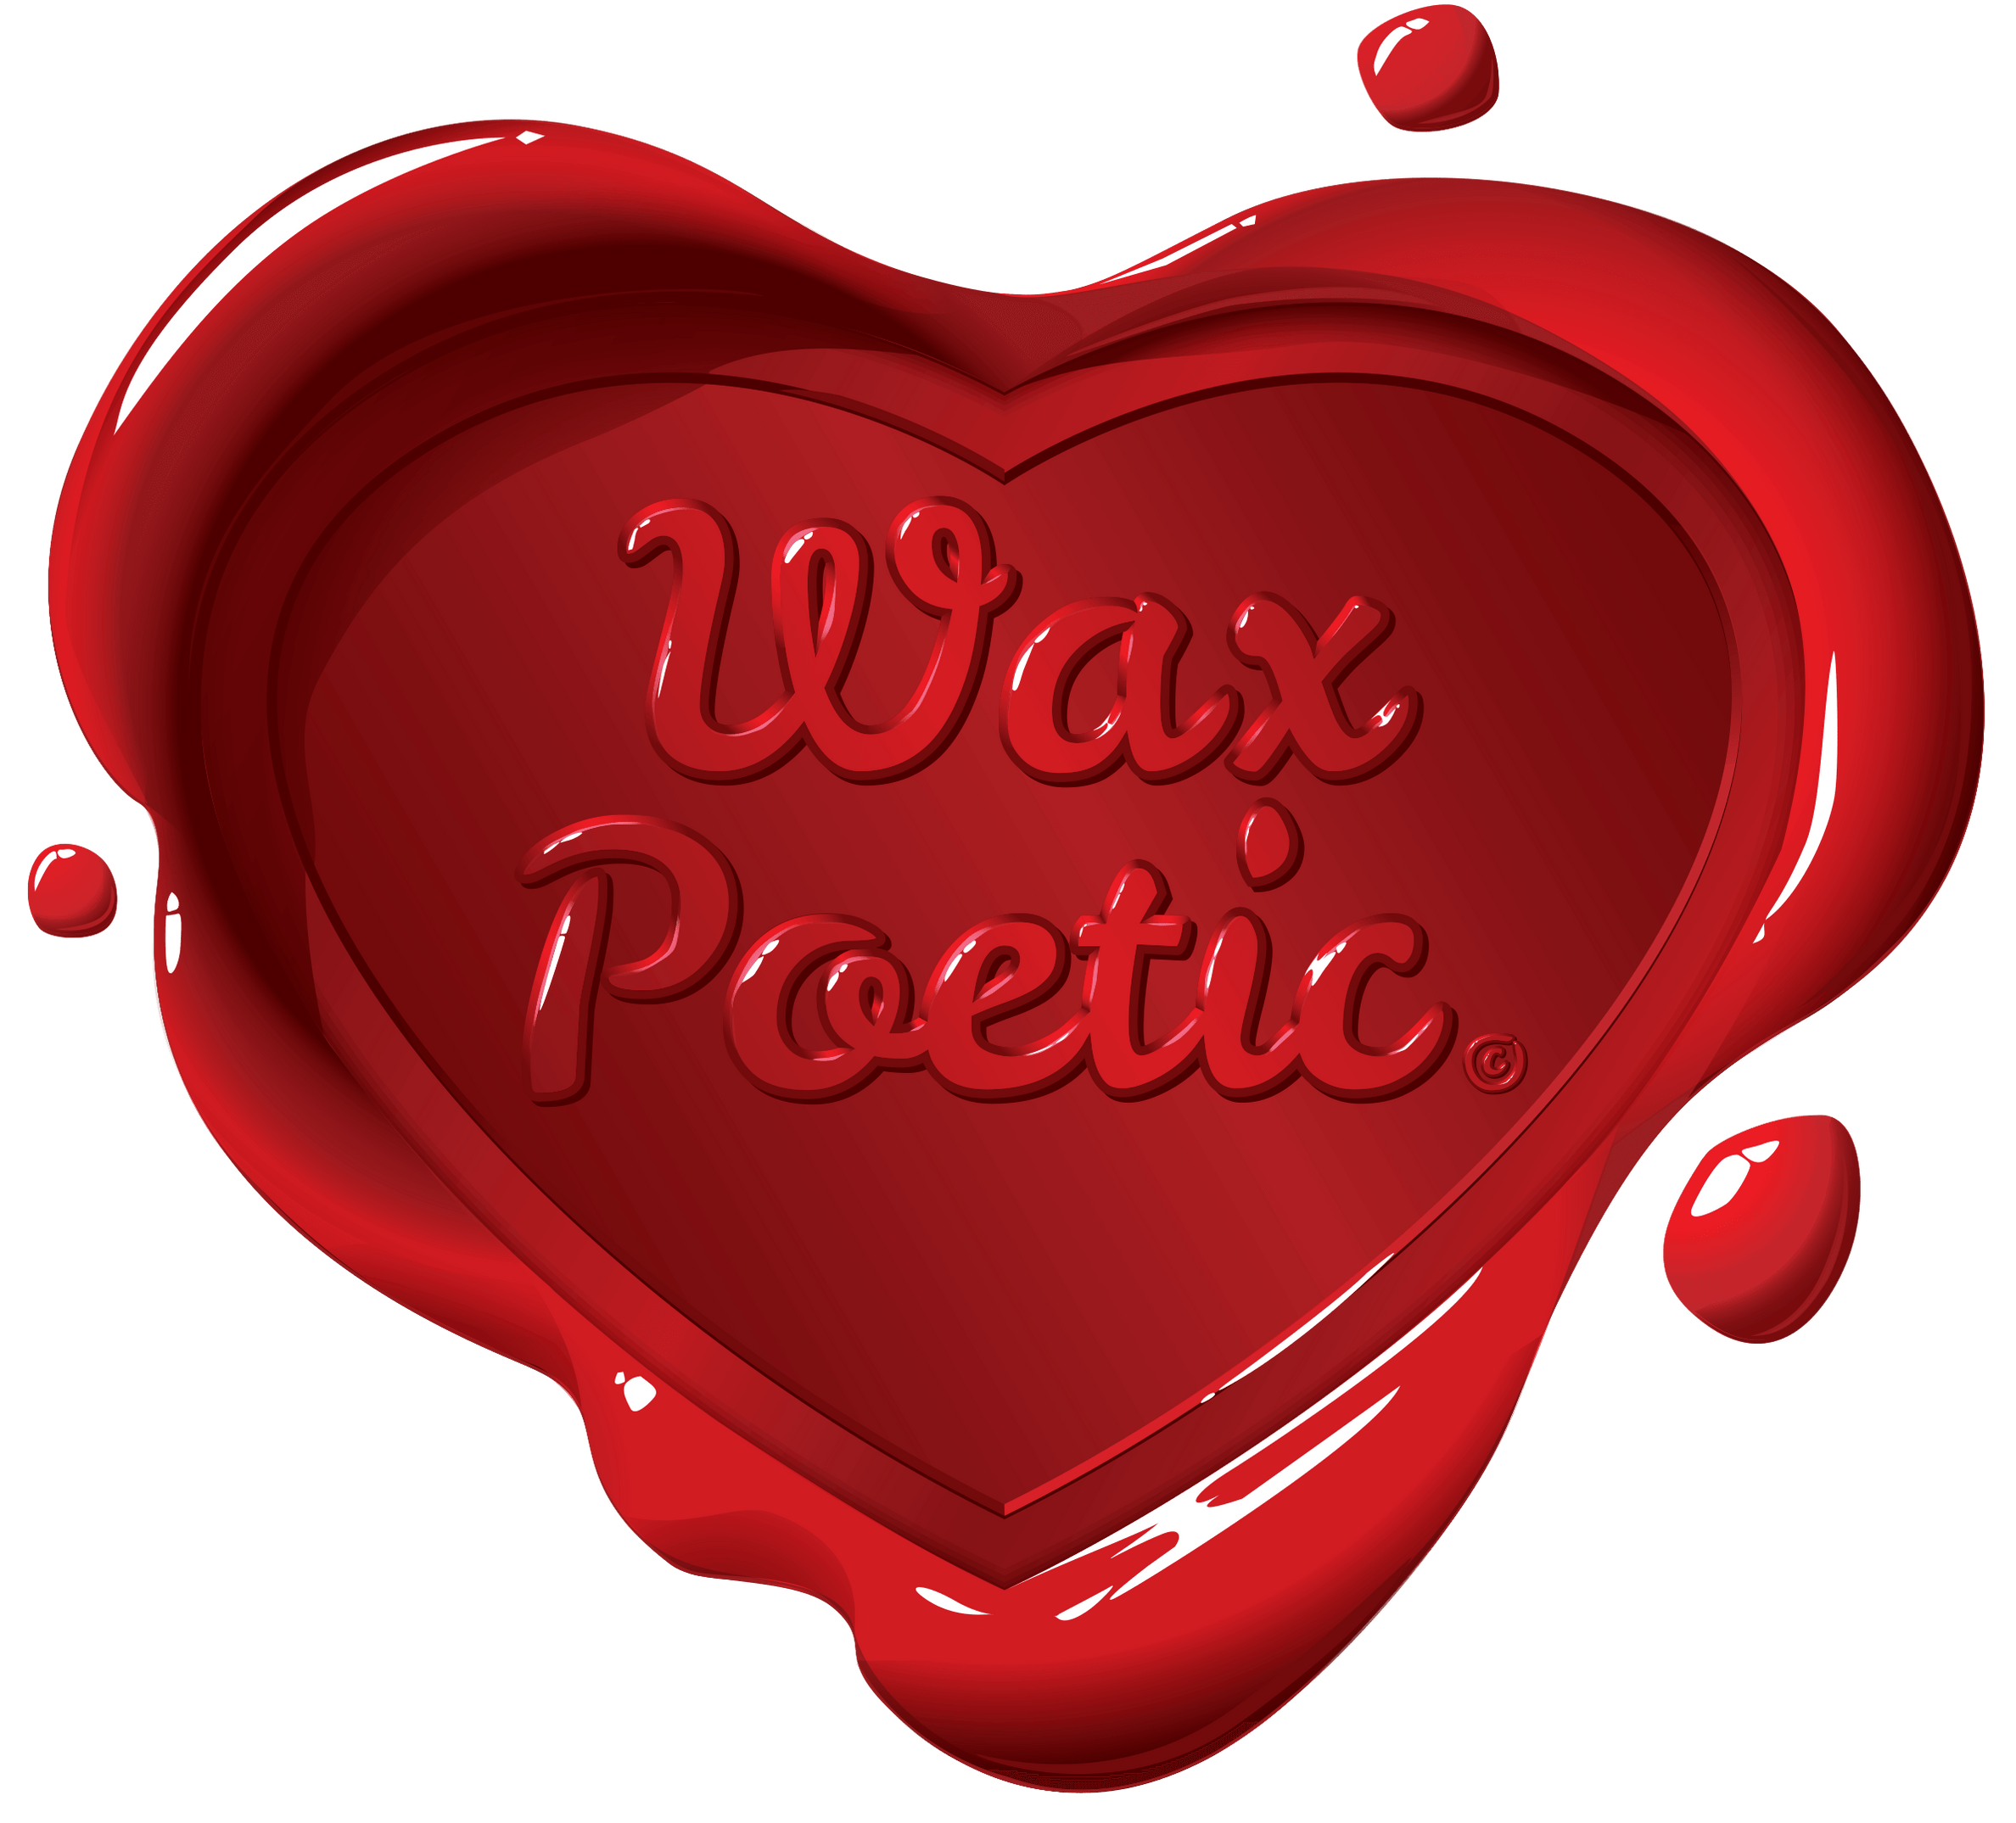 to wax poetic